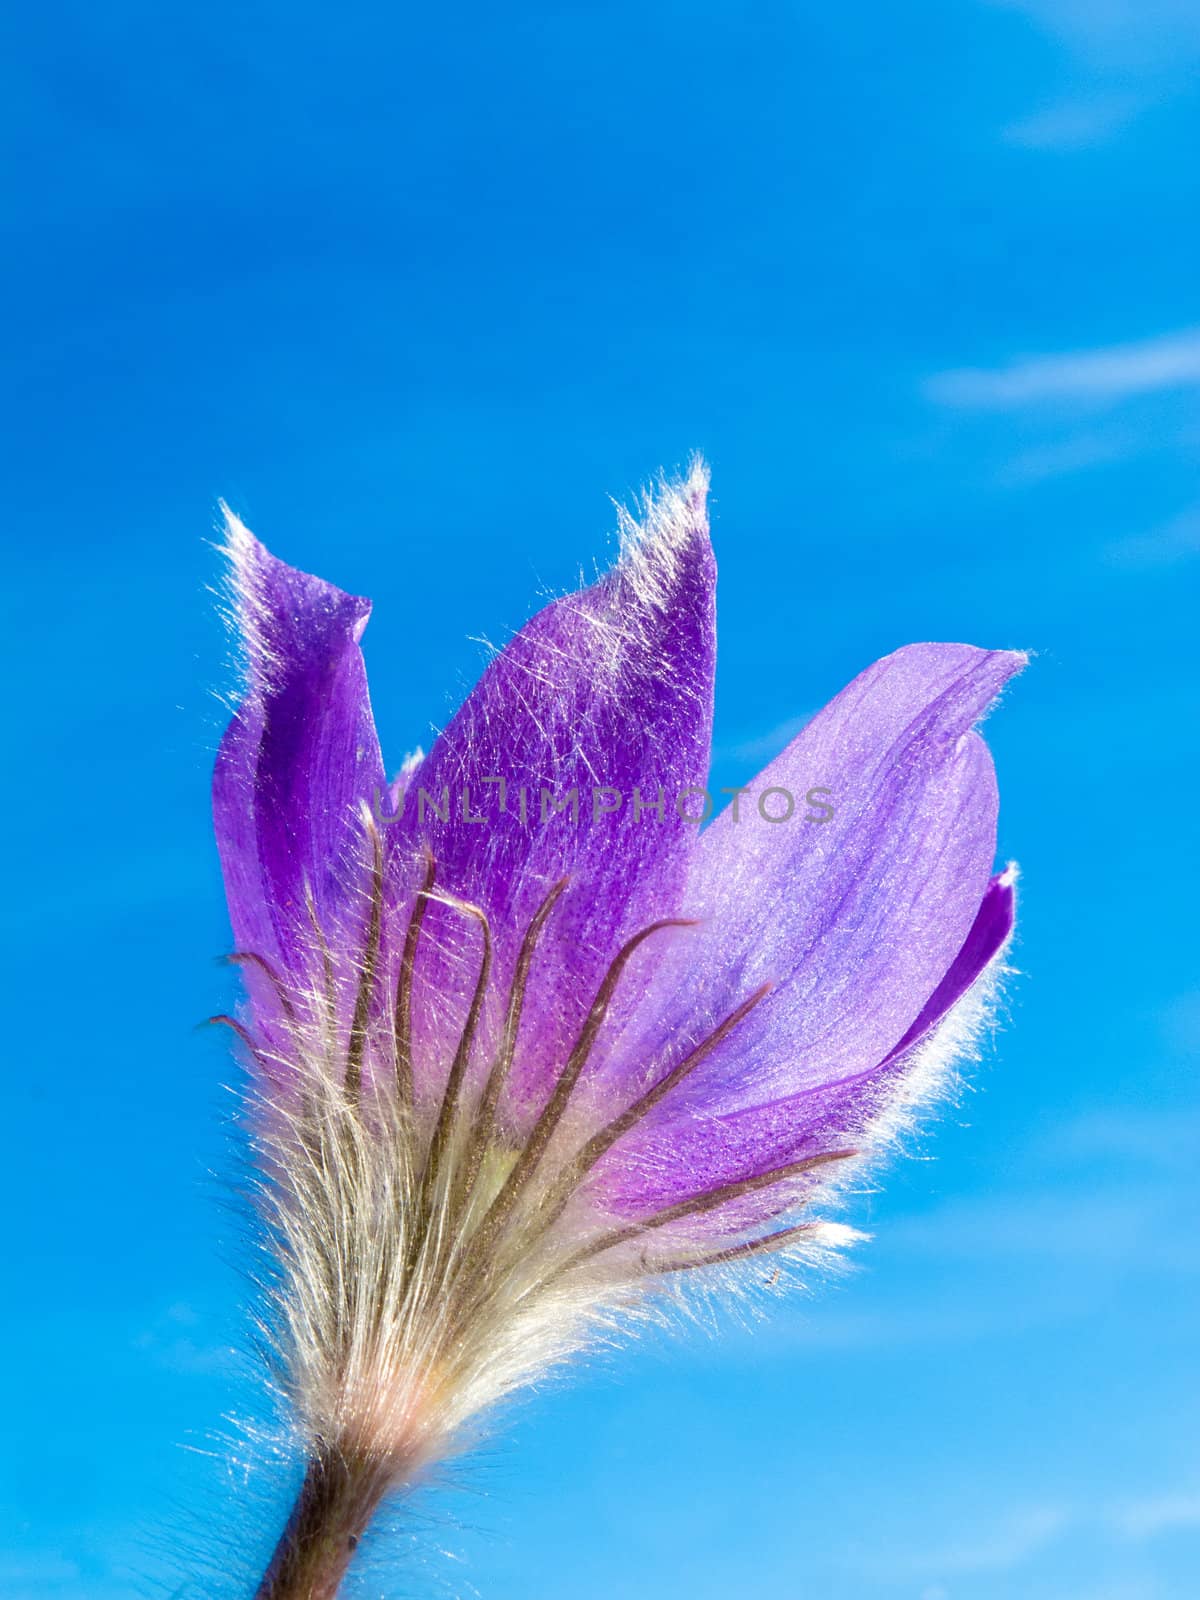 Pasque Flower close-up against blue sky by PiLens